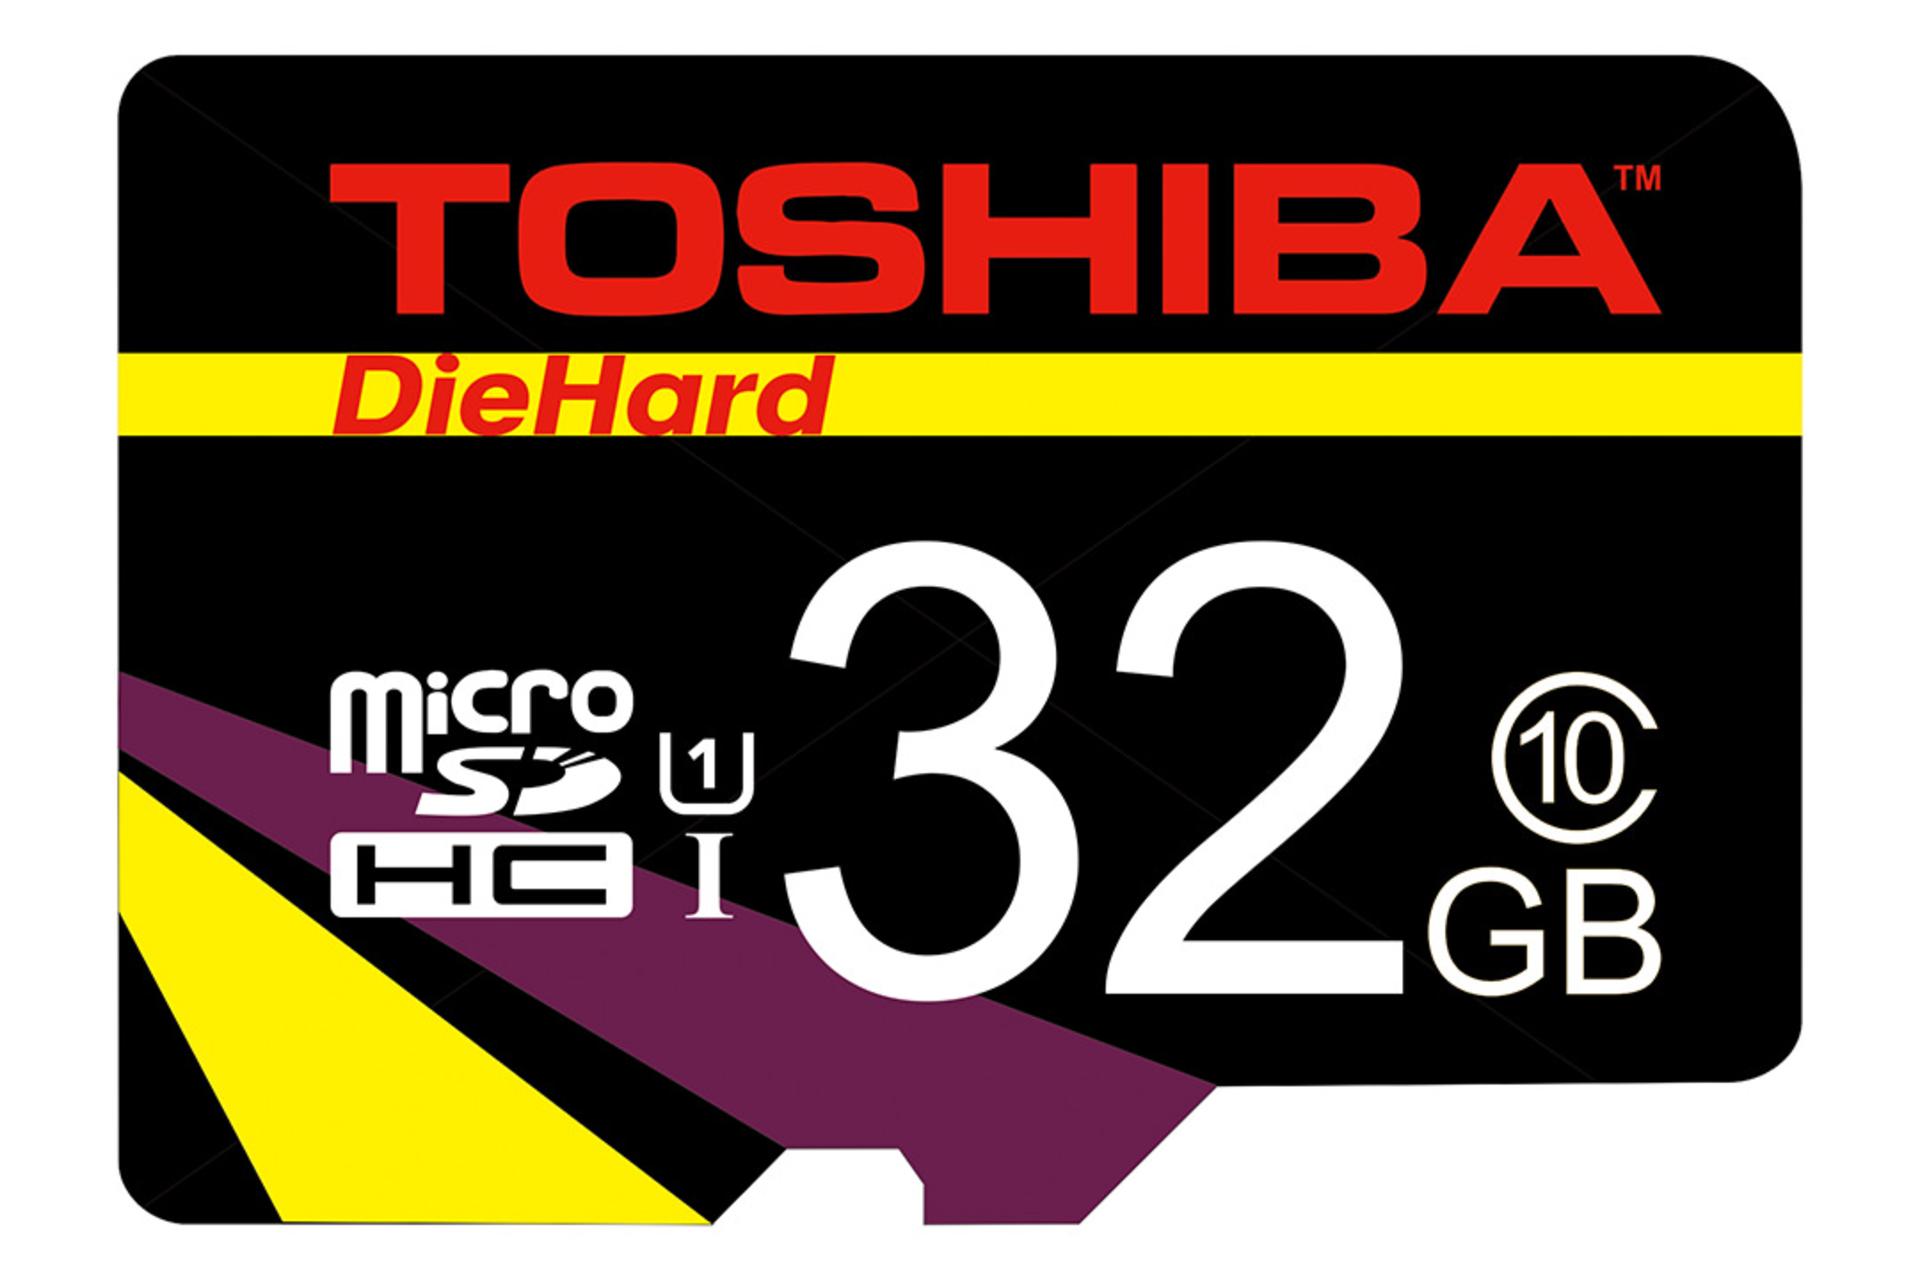 Toshiba Die Hard microSDHC Class 10 UHS-I U1 32GB